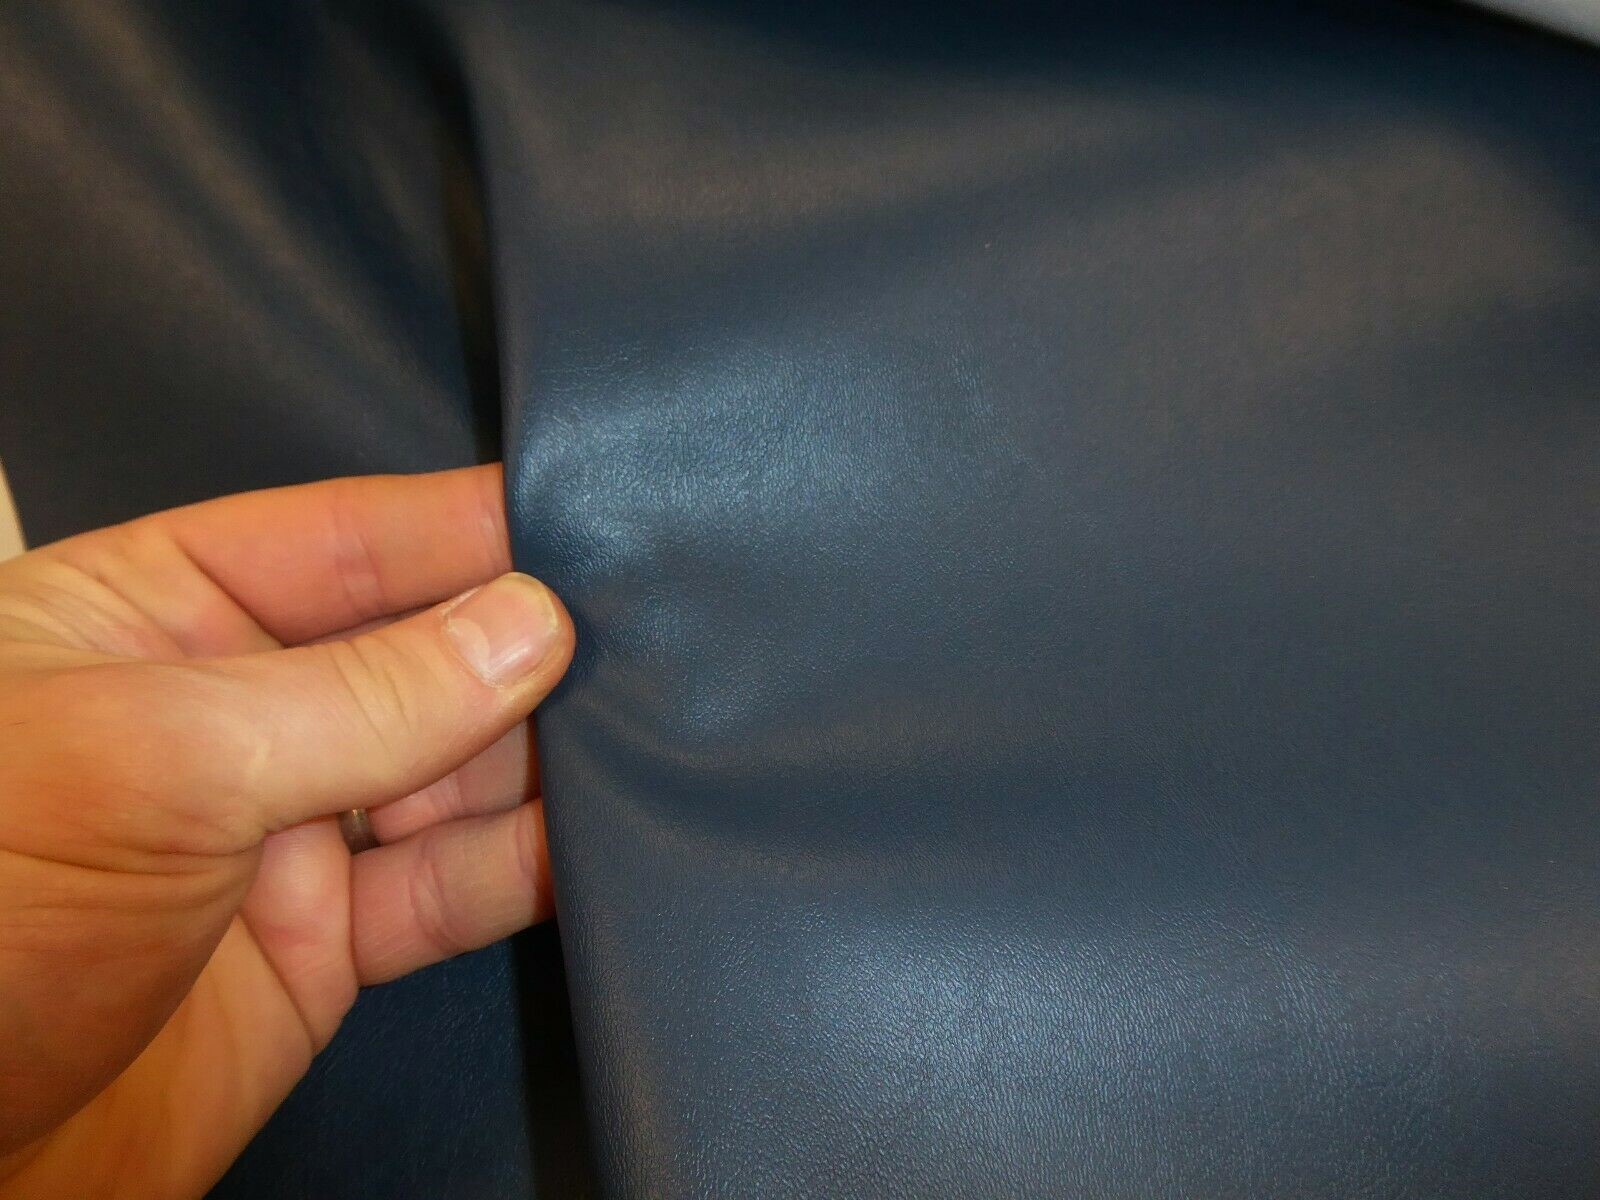 Galaxy Denim - Blue Leather Upholstery Fabric 